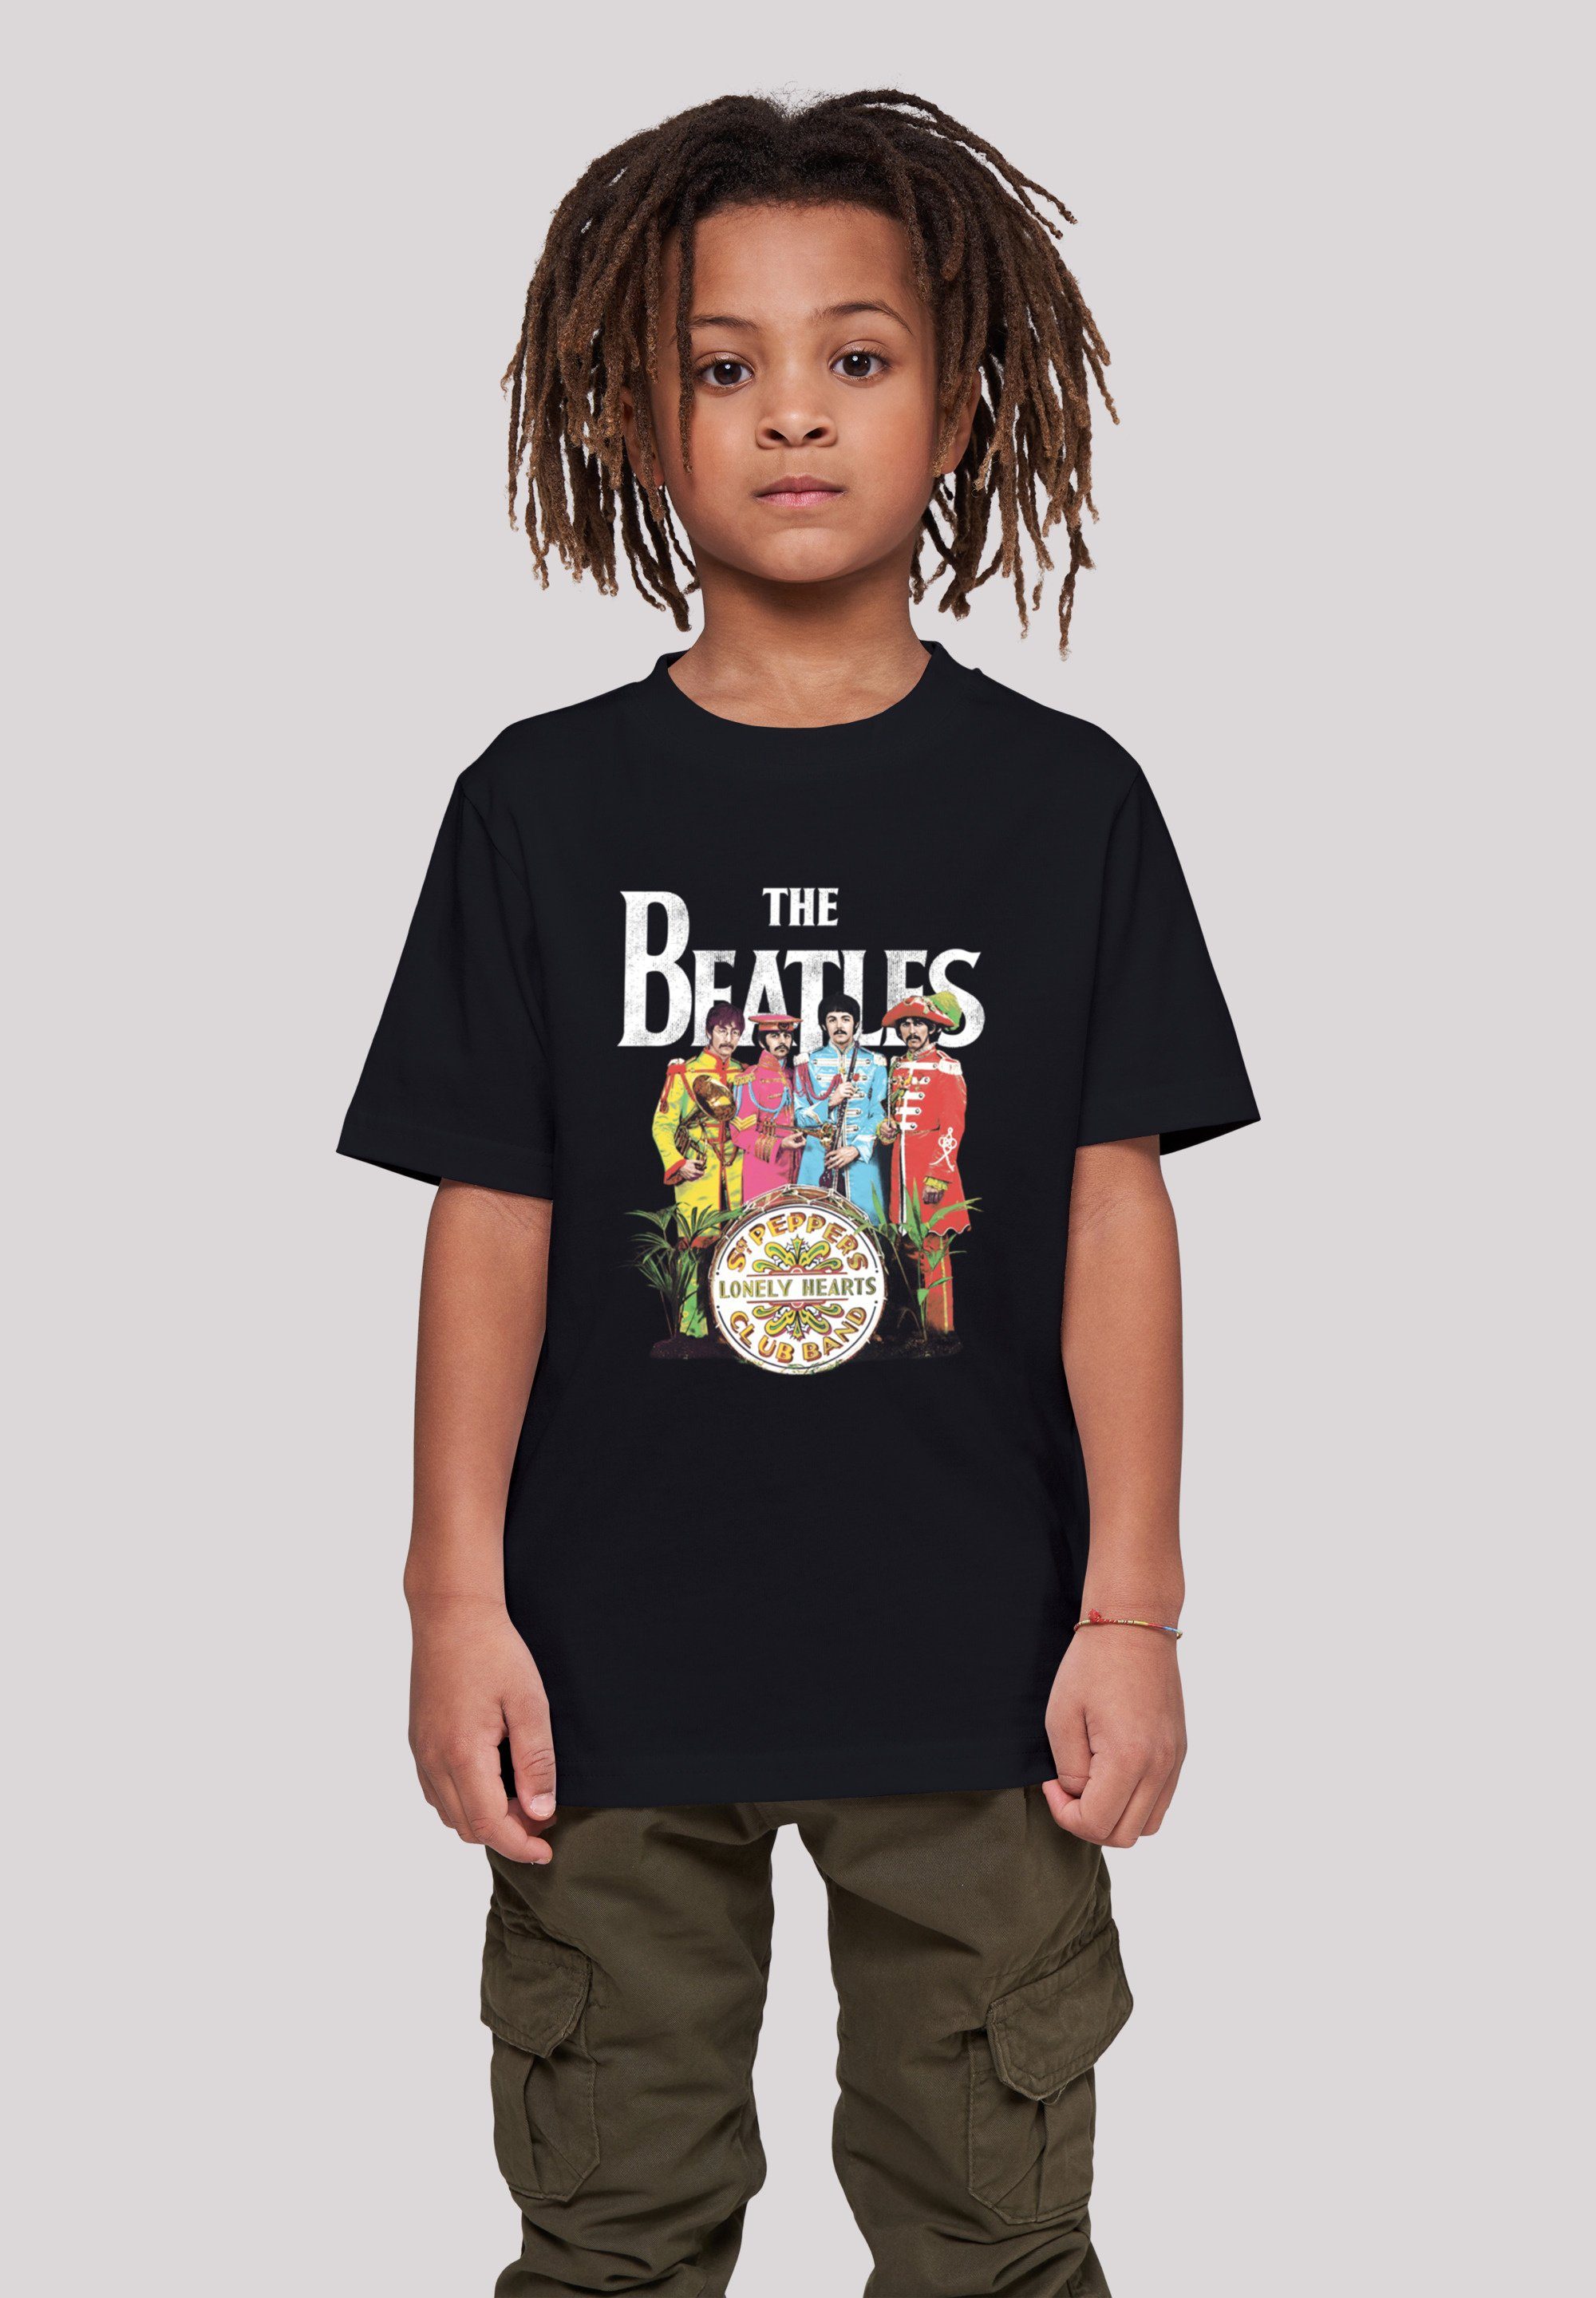 F4NT4STIC T-Shirt The Beatles Band Sgt trägt ist Model cm Print, groß Das Pepper 145/152 und Black 145 Größe